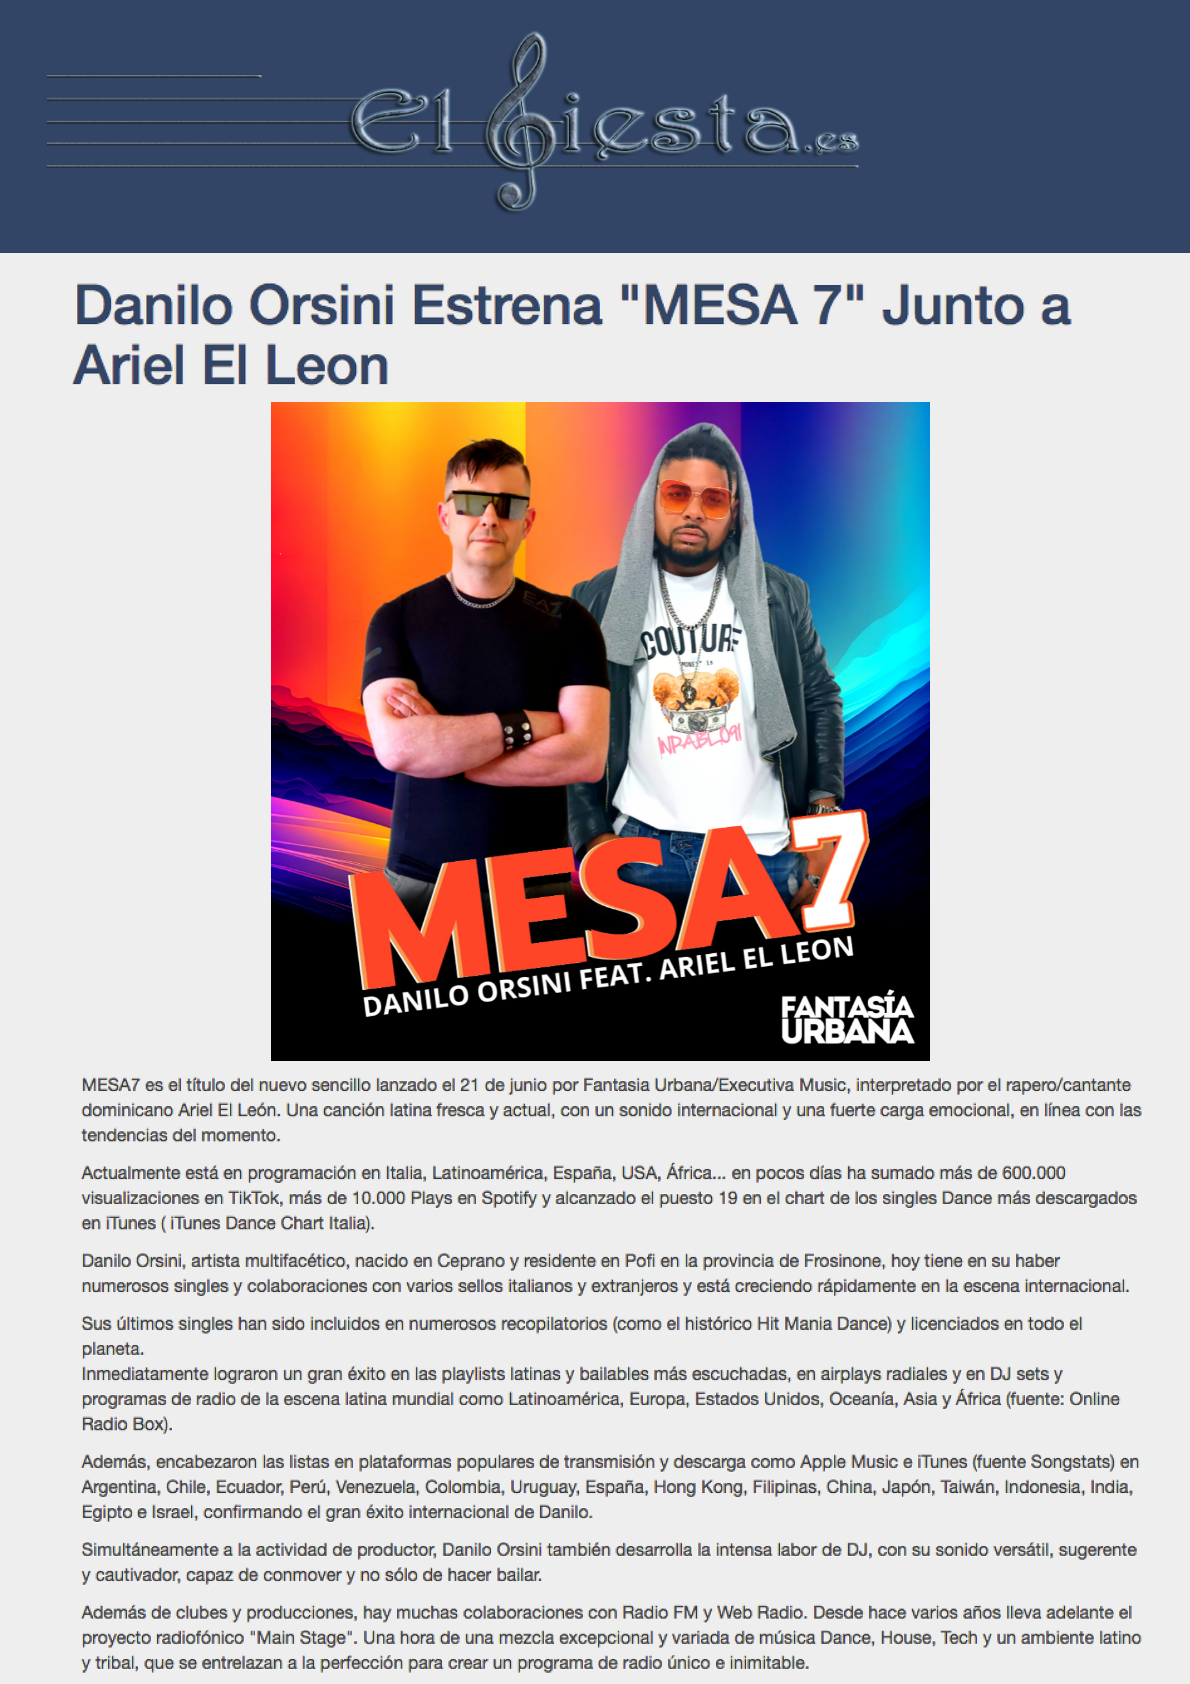 MESA7 @ El Fiesta - A4 - Spagna - 1